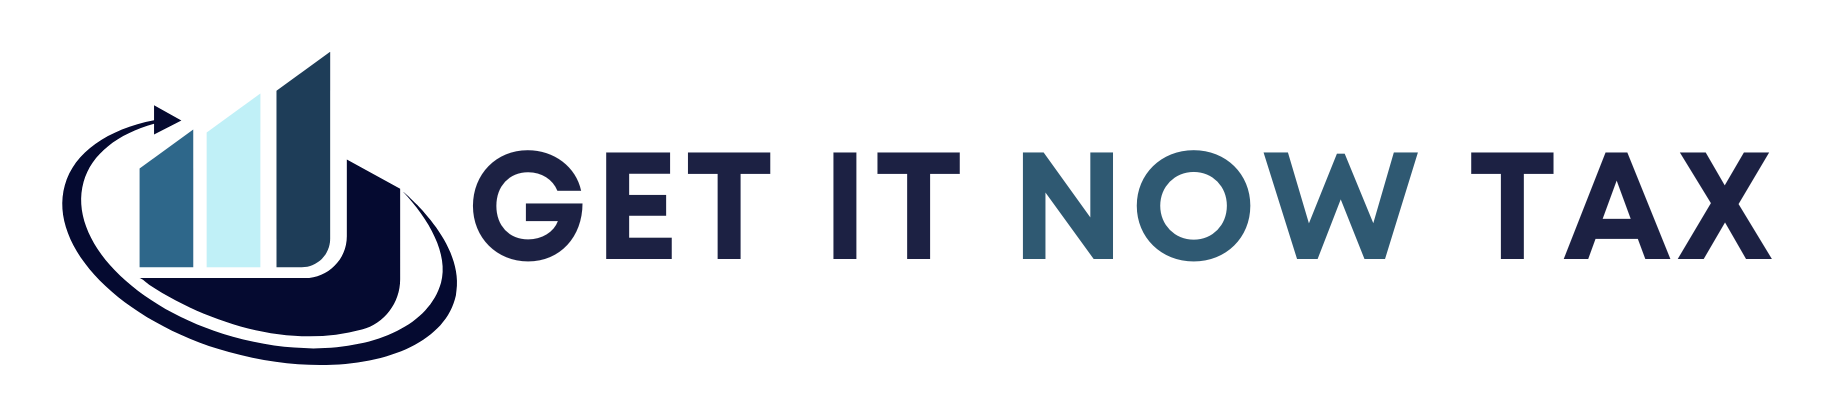 Get It Now Tax LLC logo